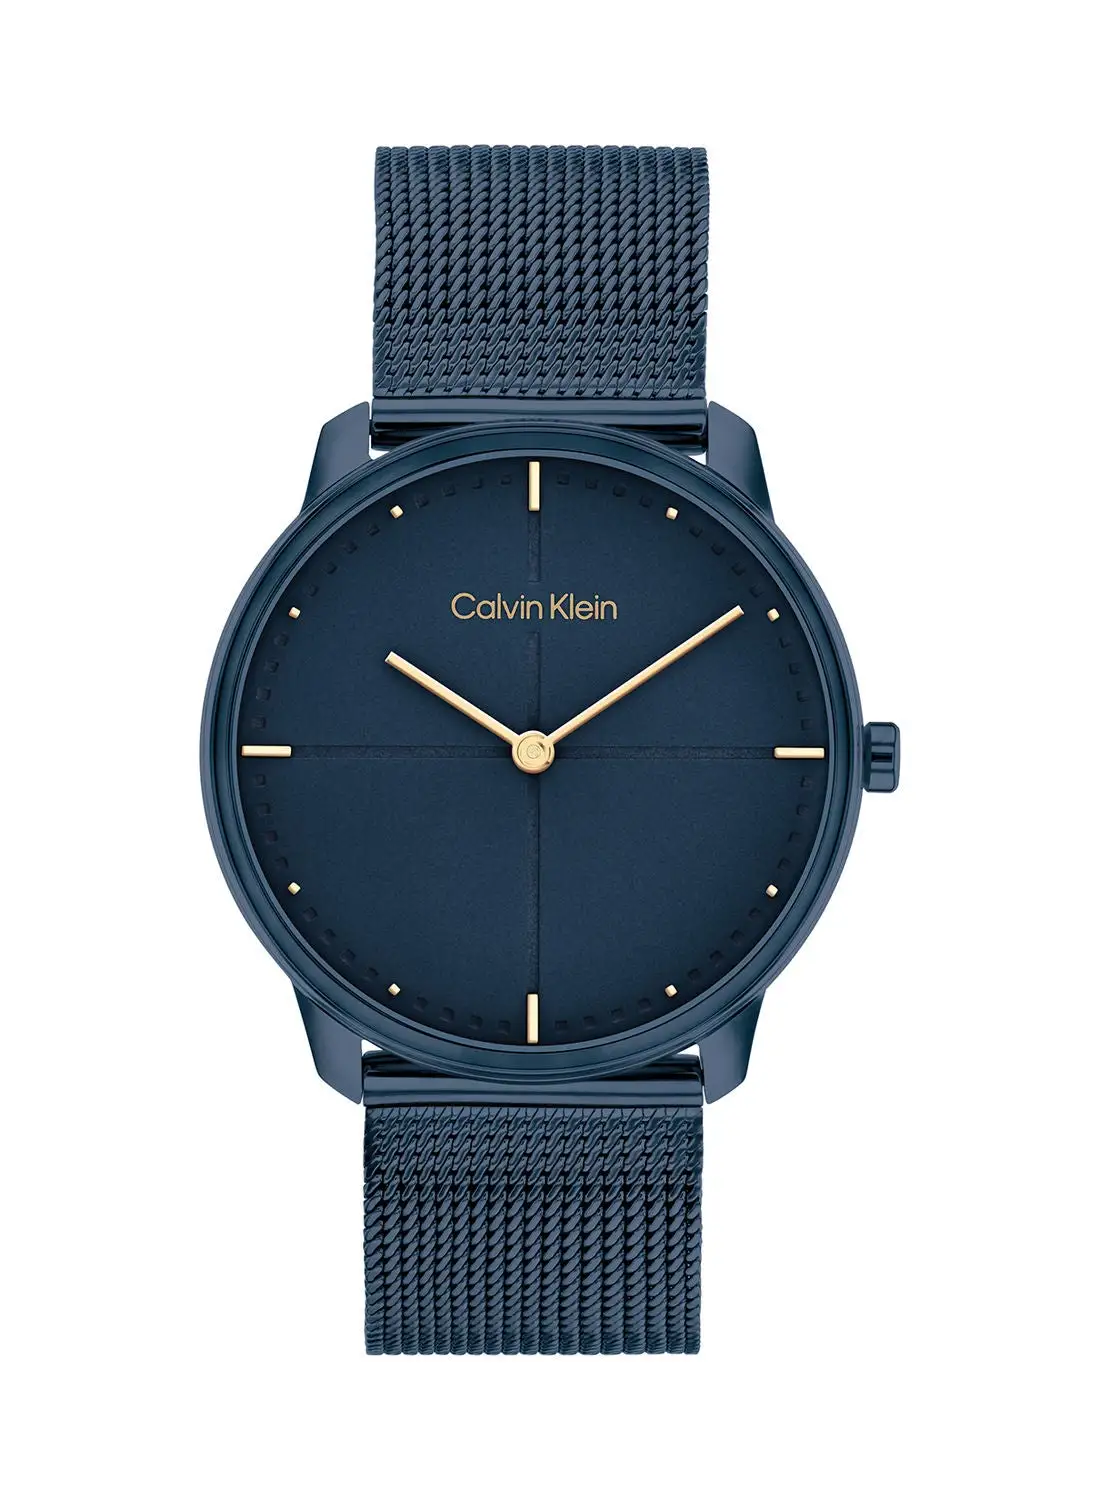 CALVIN KLEIN Iconic Unisex Stainless Steel Watch - 25200160